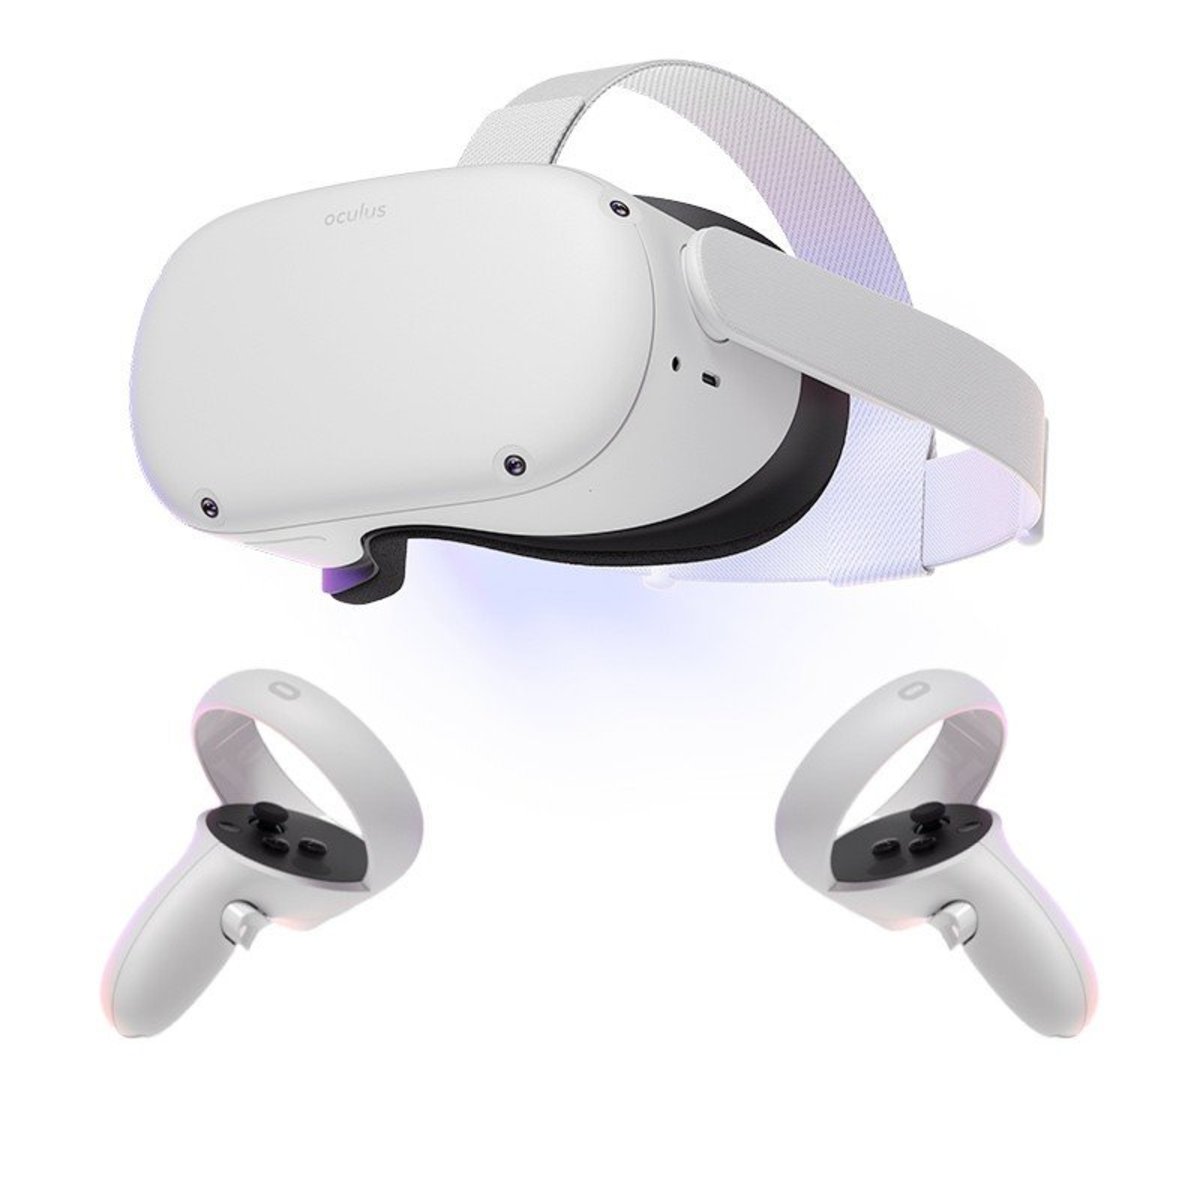 Quest 2 All-in-One VR  虛擬實境頭戴式遊戲裝置 (128GB) (平行進口)